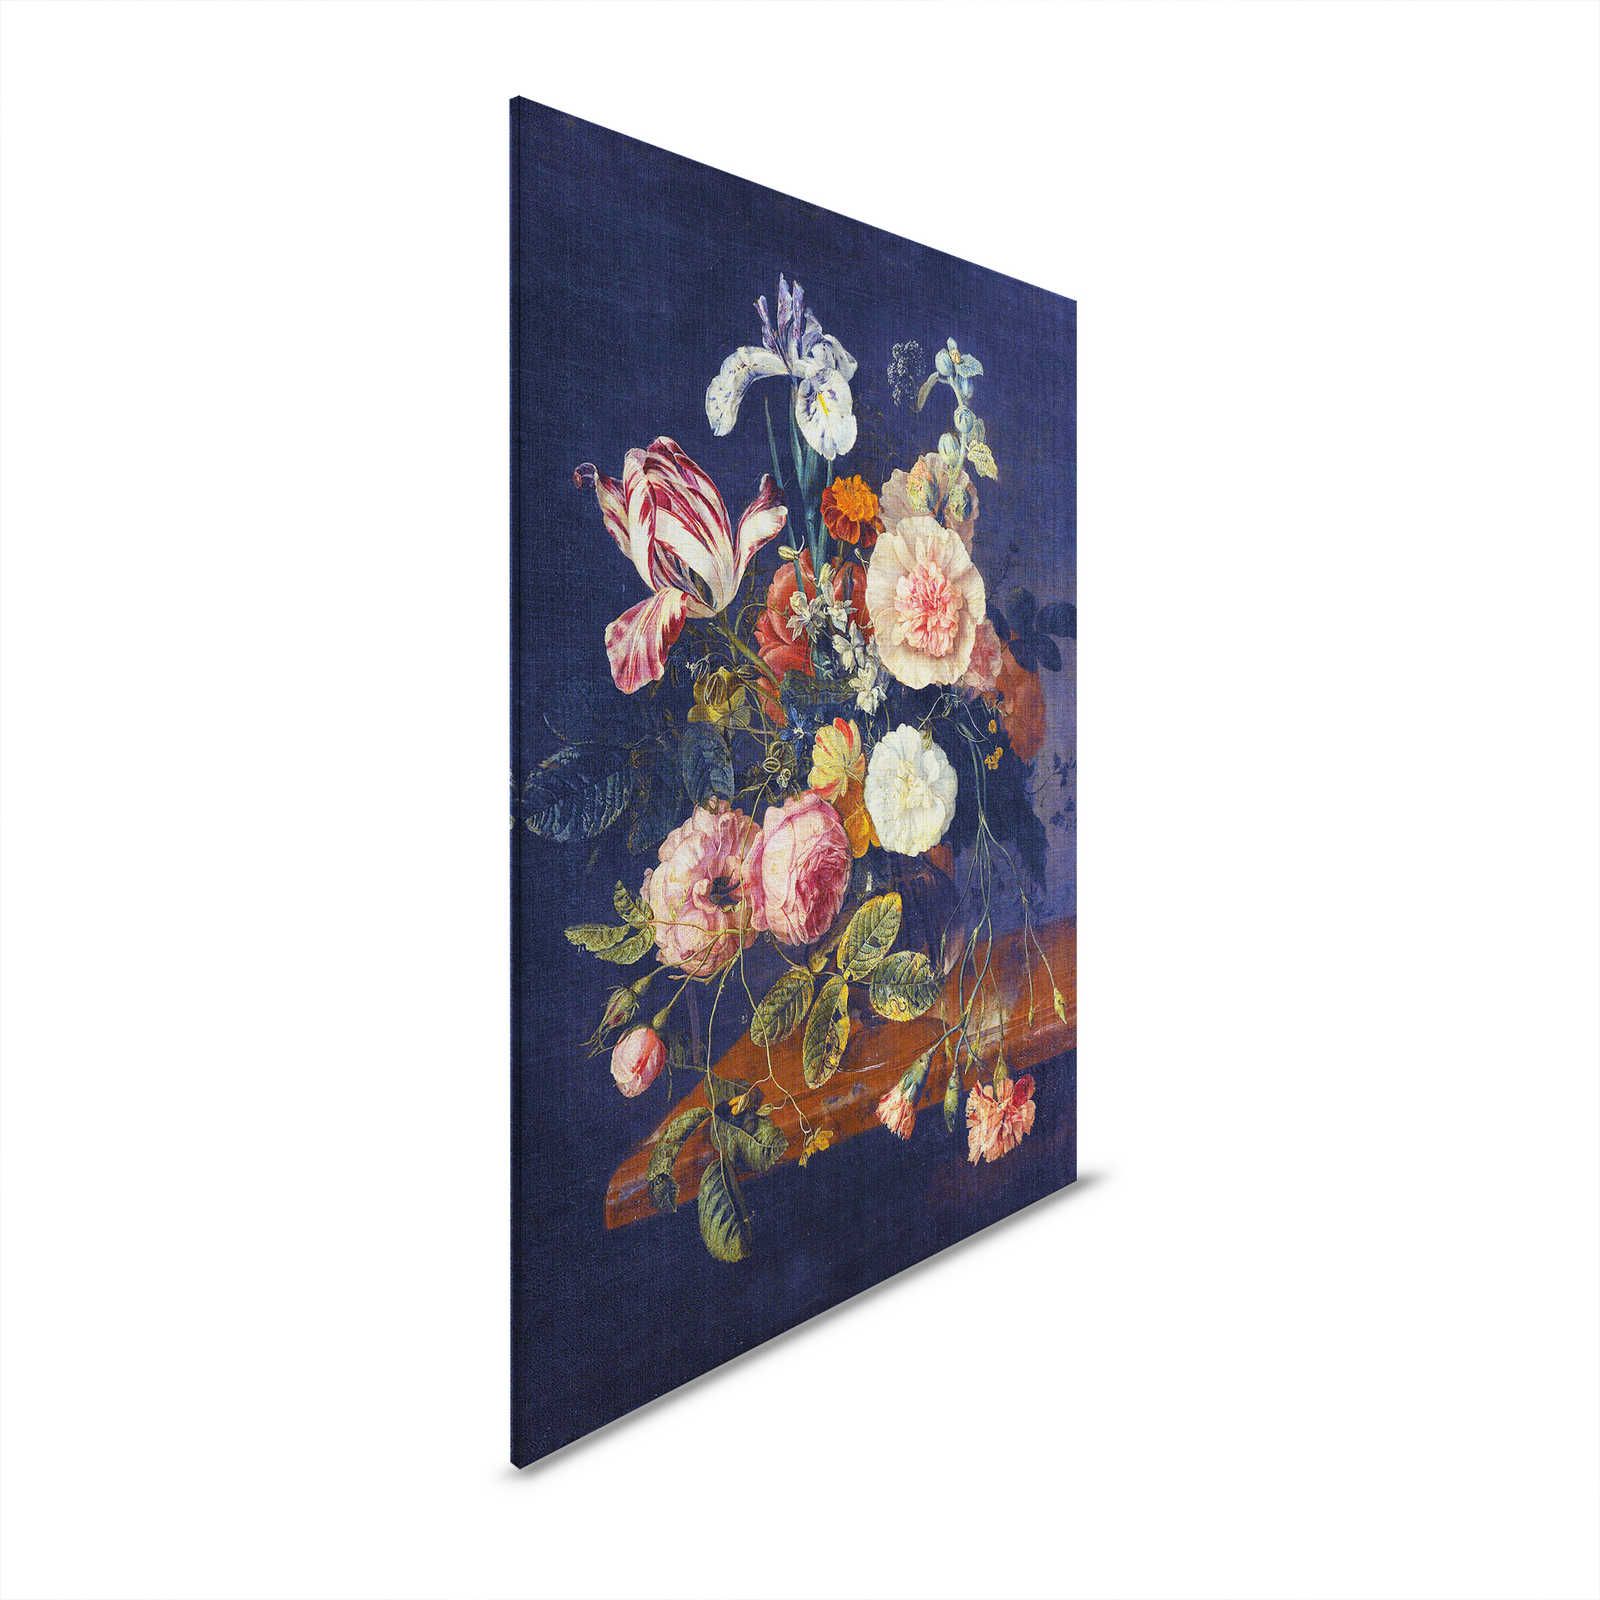         Artists Studio 1 - Canvas painting Flowers Still Life Dark Blue - 0,60 m x 0,90 m
    